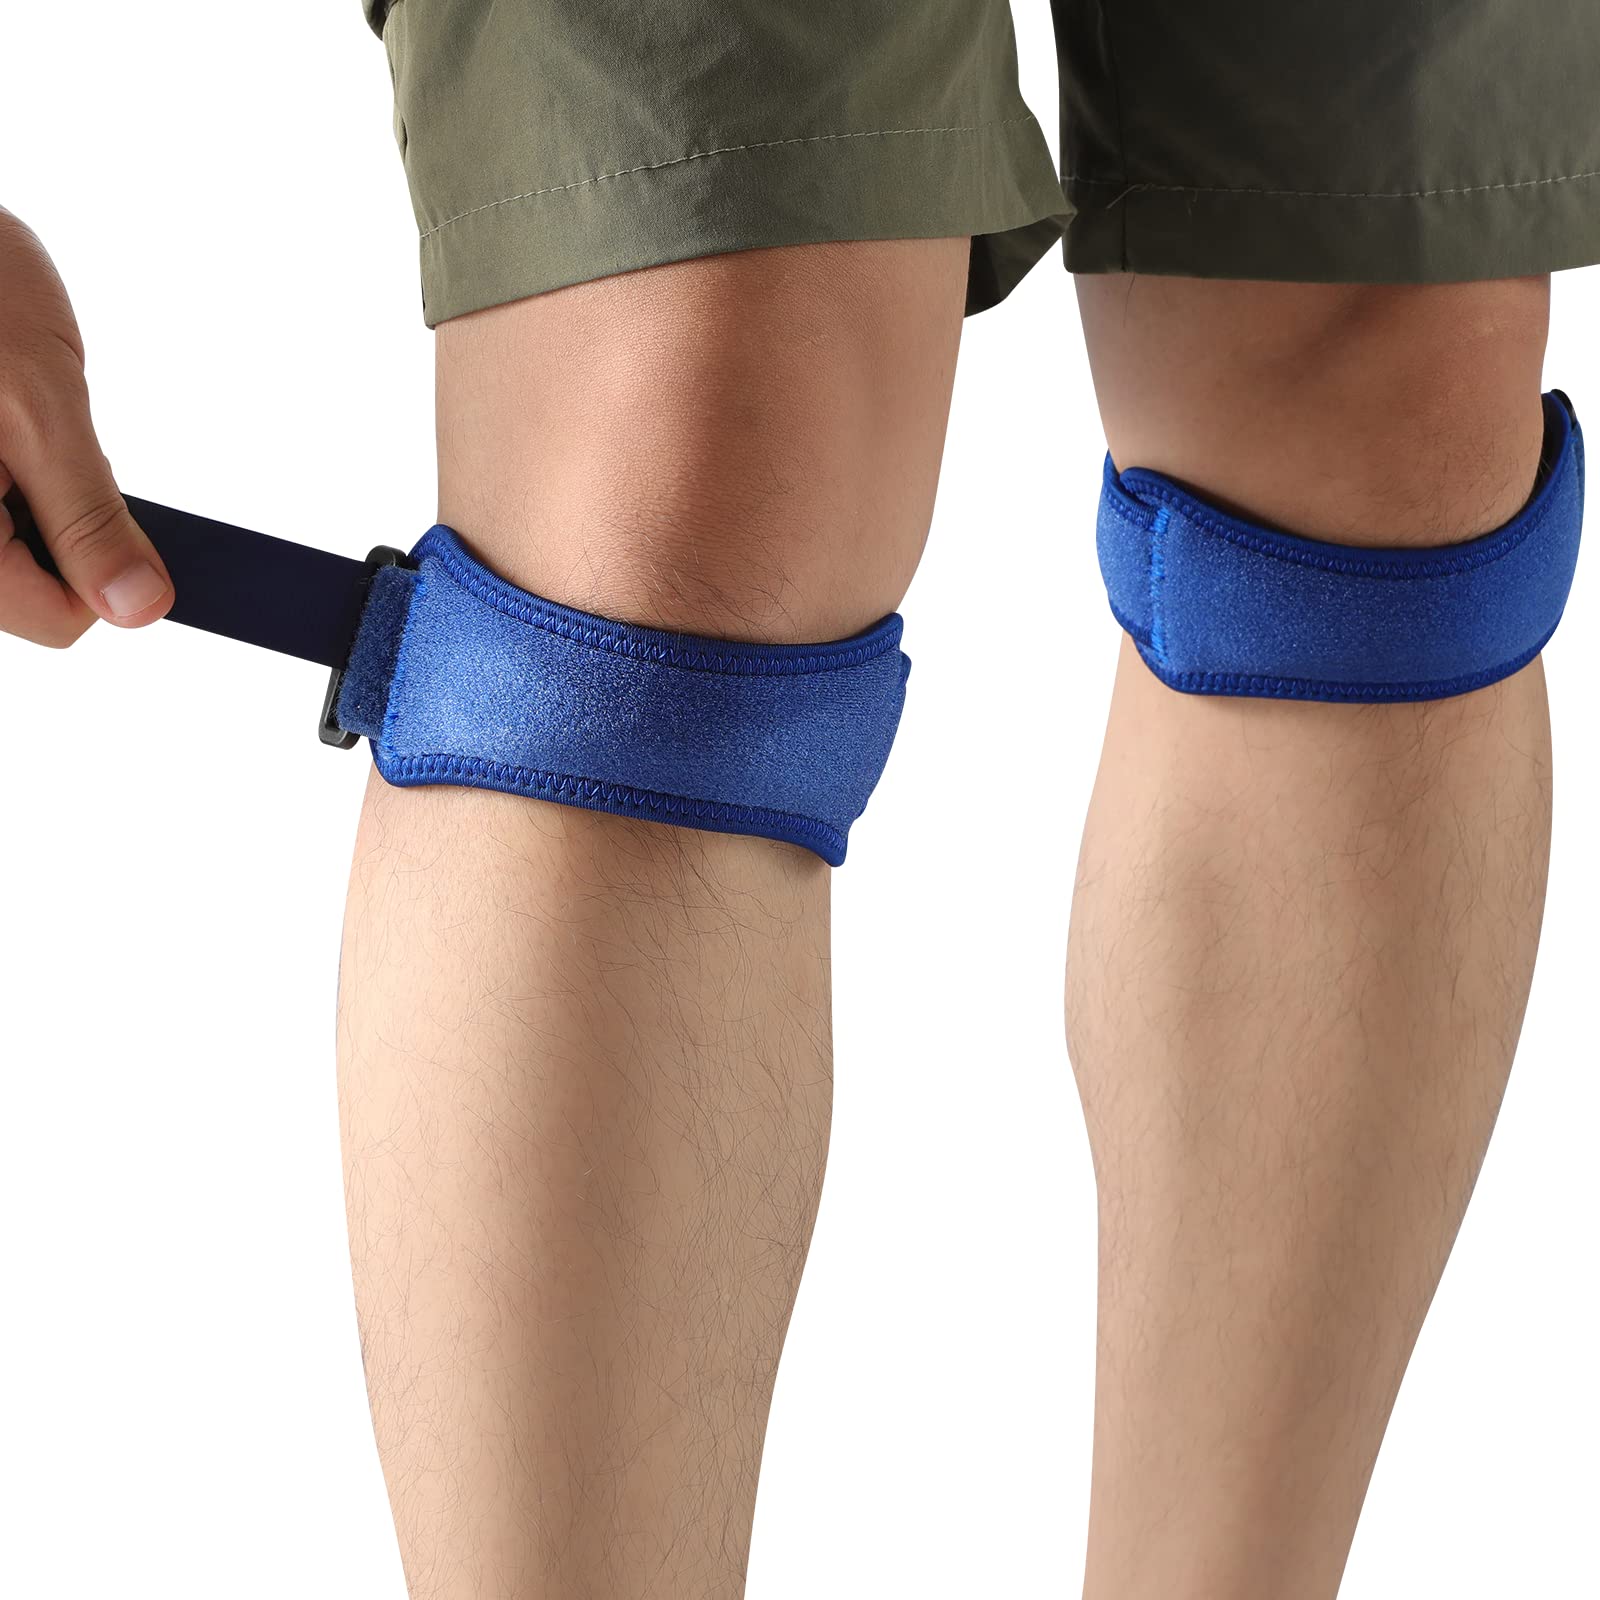 Patella Knee Strap, AGPTEK 2 Pack Knee Support Brace, Anti-slip